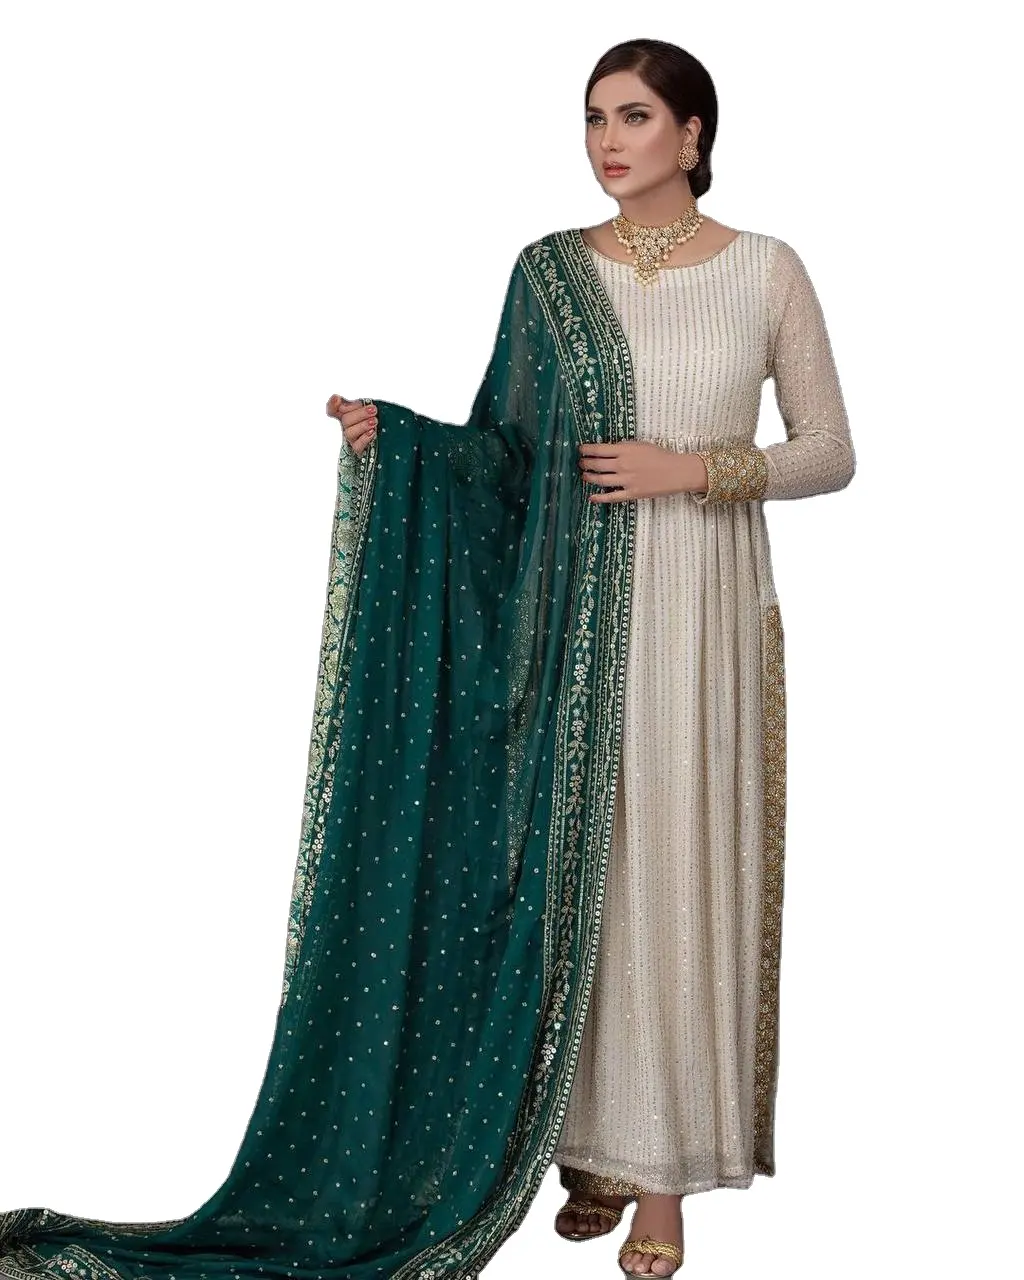 सुरुचिपूर्ण सुंदर कॉन्ट्रा रंगीन भारी डिजाइनर पूर्ण आस्तीन पाकिस्तानी बांग्लादेश जमाने लॉन प्रकार Shalwar कमीज